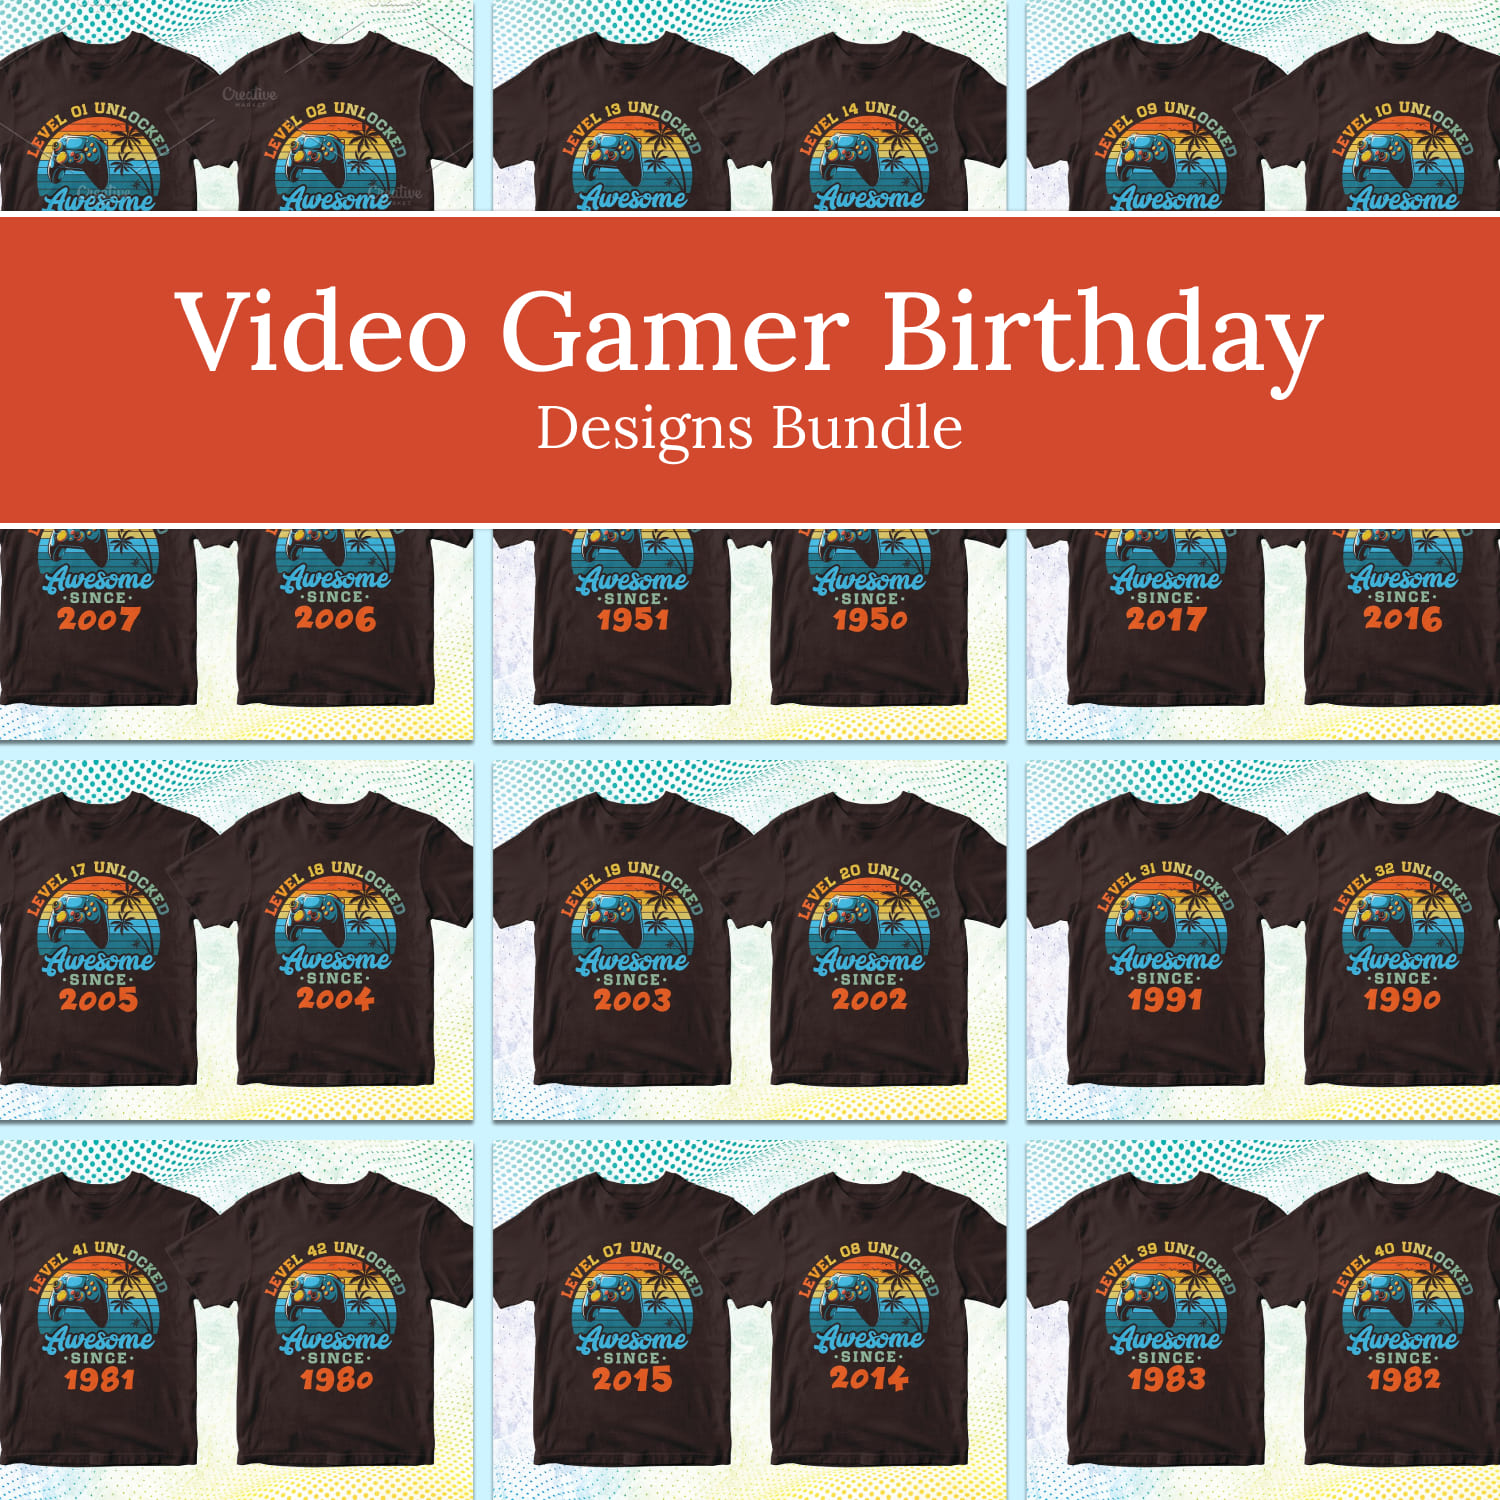 Video Gamer Birthday Designs Bundle.